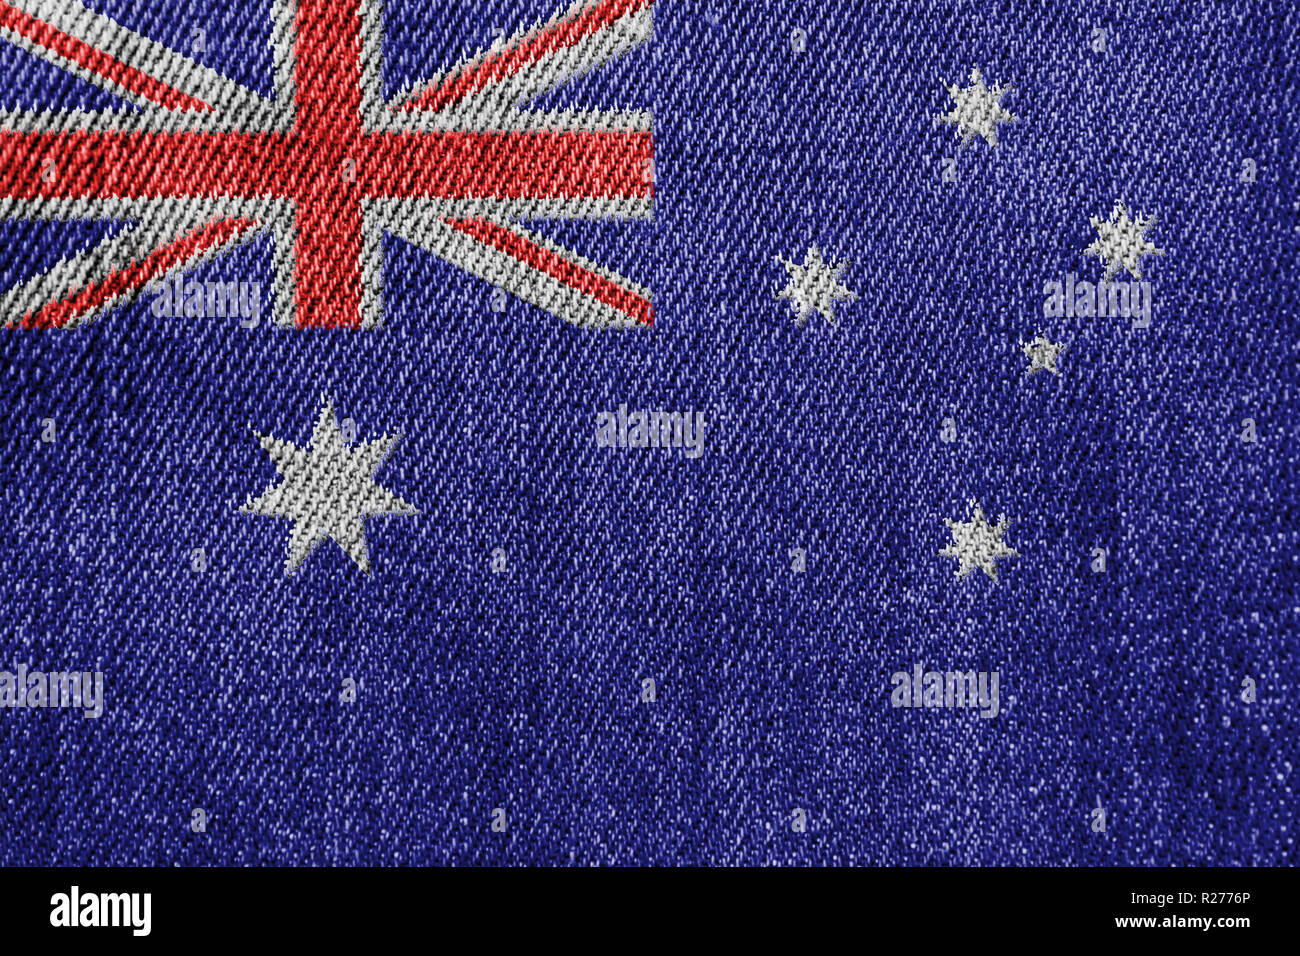 Australia Textile Industry Or Politics Concept: Australian Flag Denim Jeans Background Texture Stock Photo